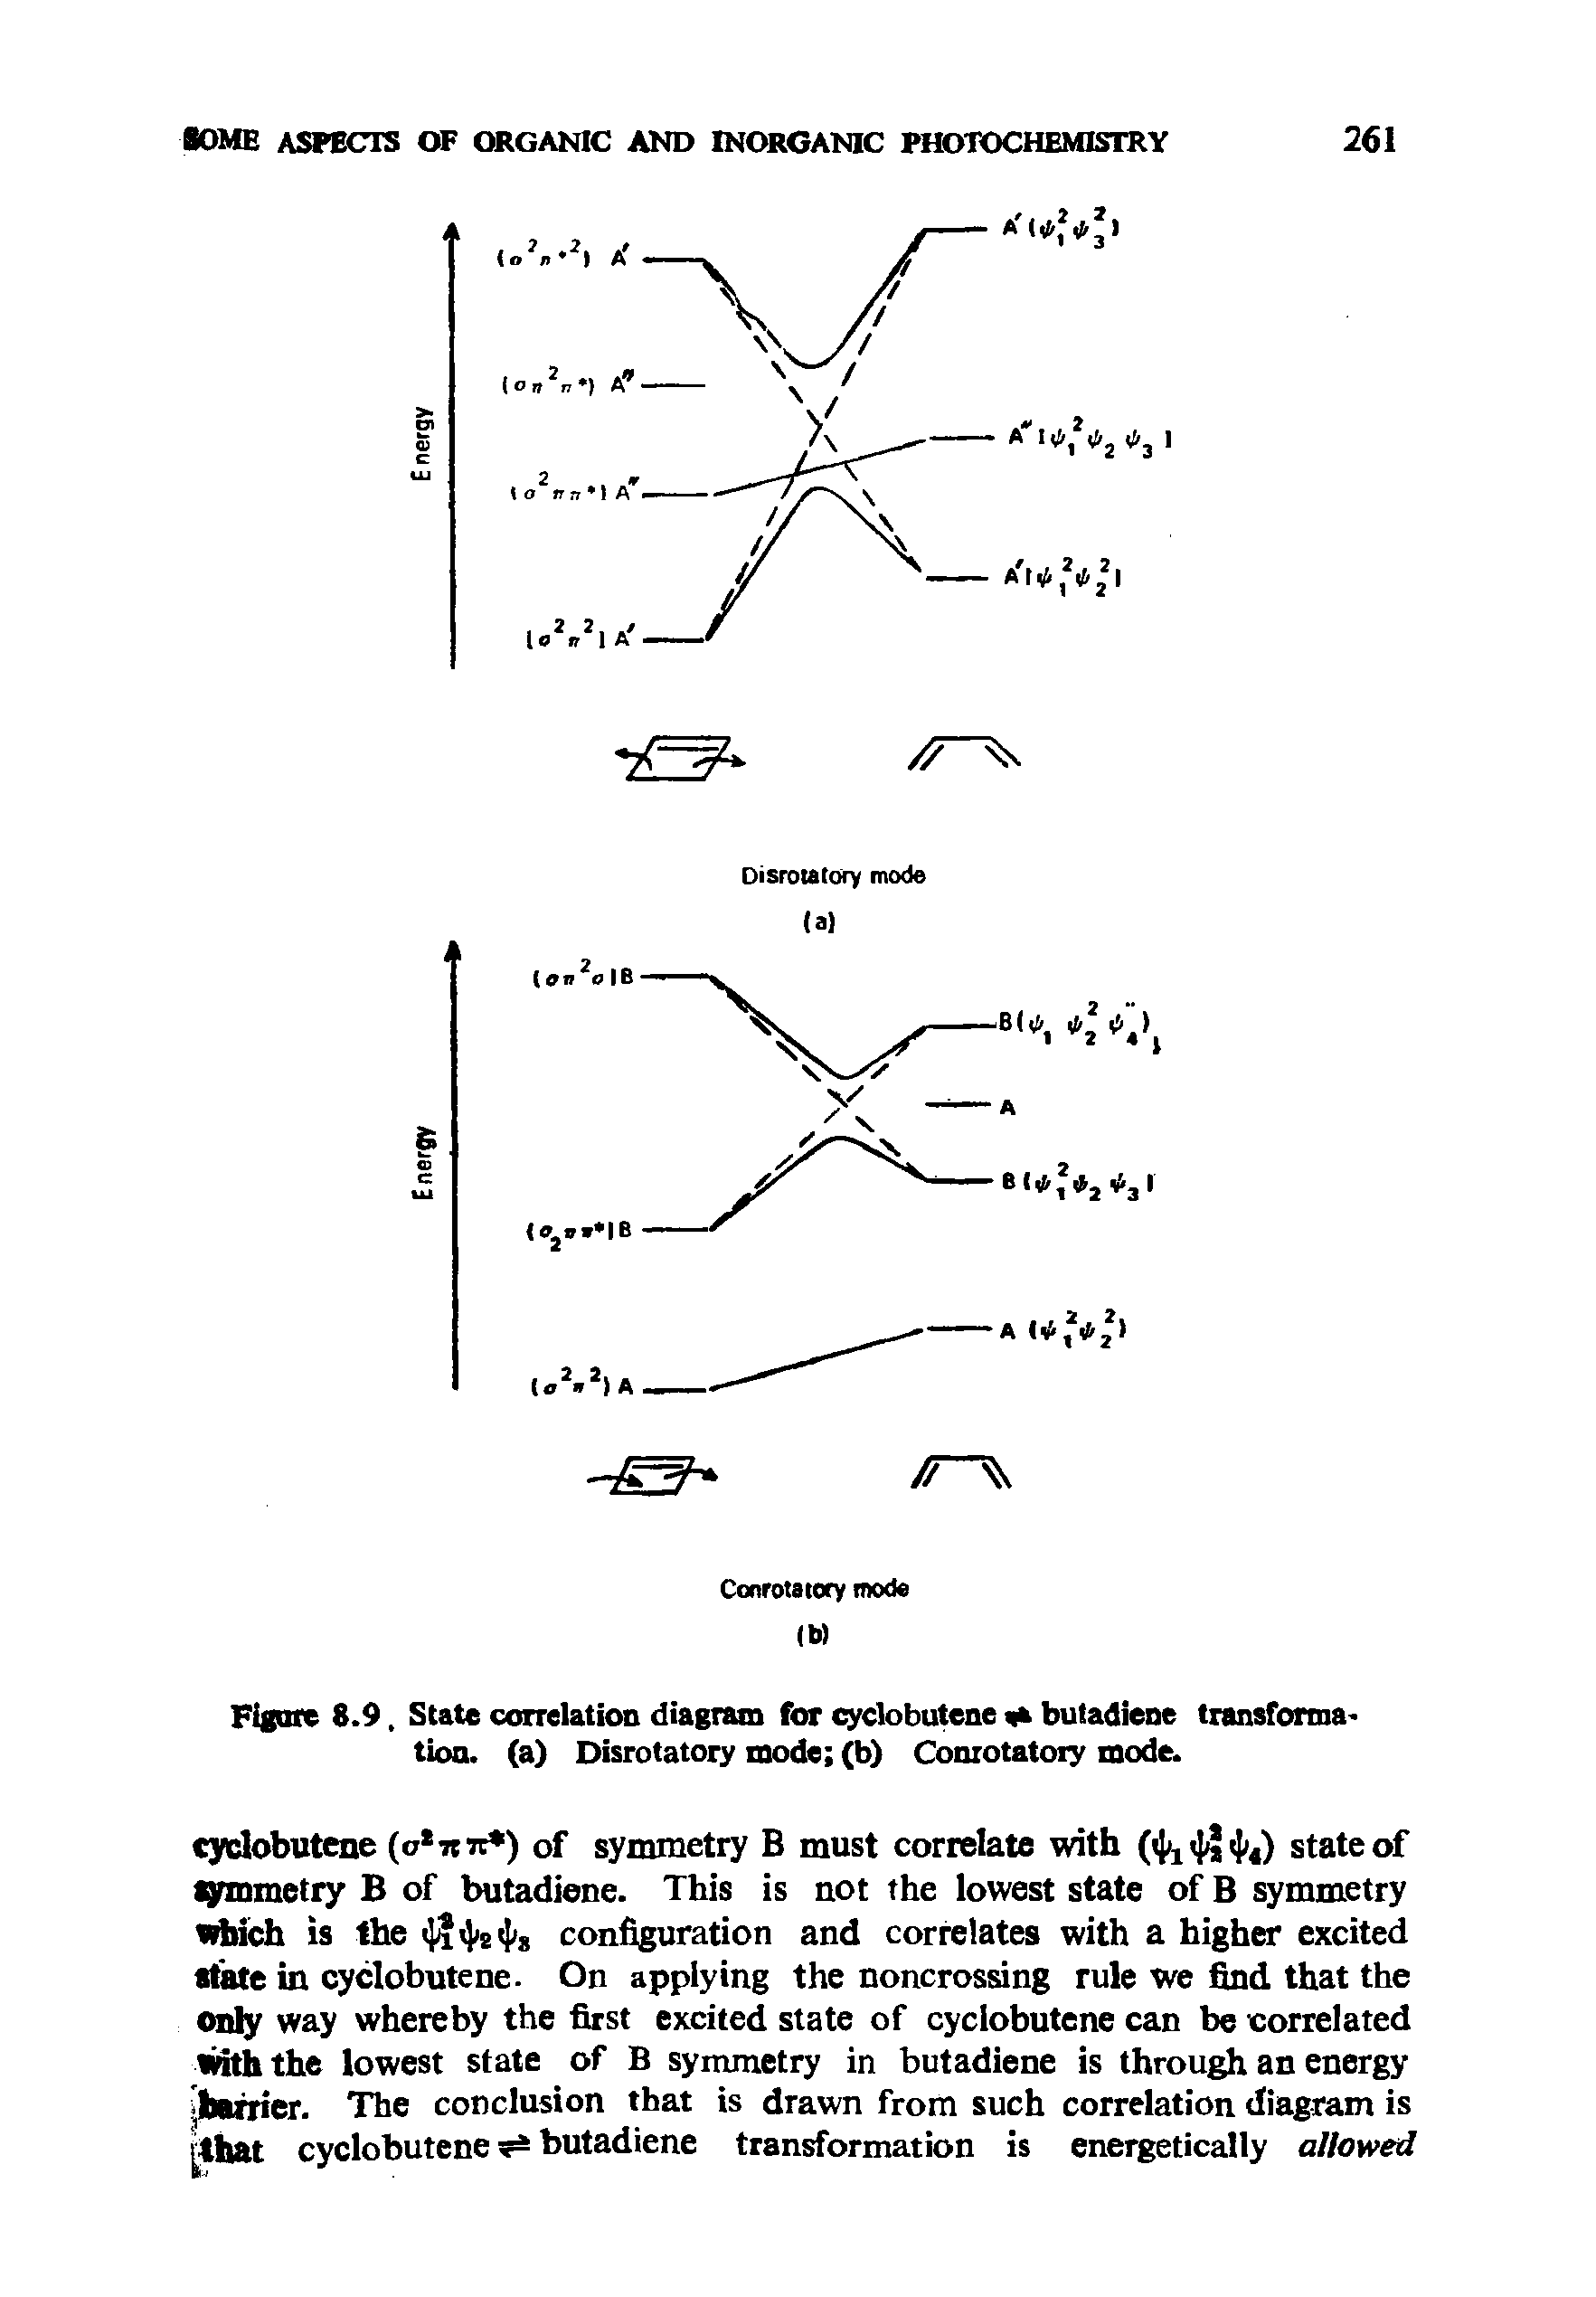 Figure 8.9, State correlation diagram for cyclobutene a butadiene transformation. (a) Disrotatory mode (b) Conrotatory mode.